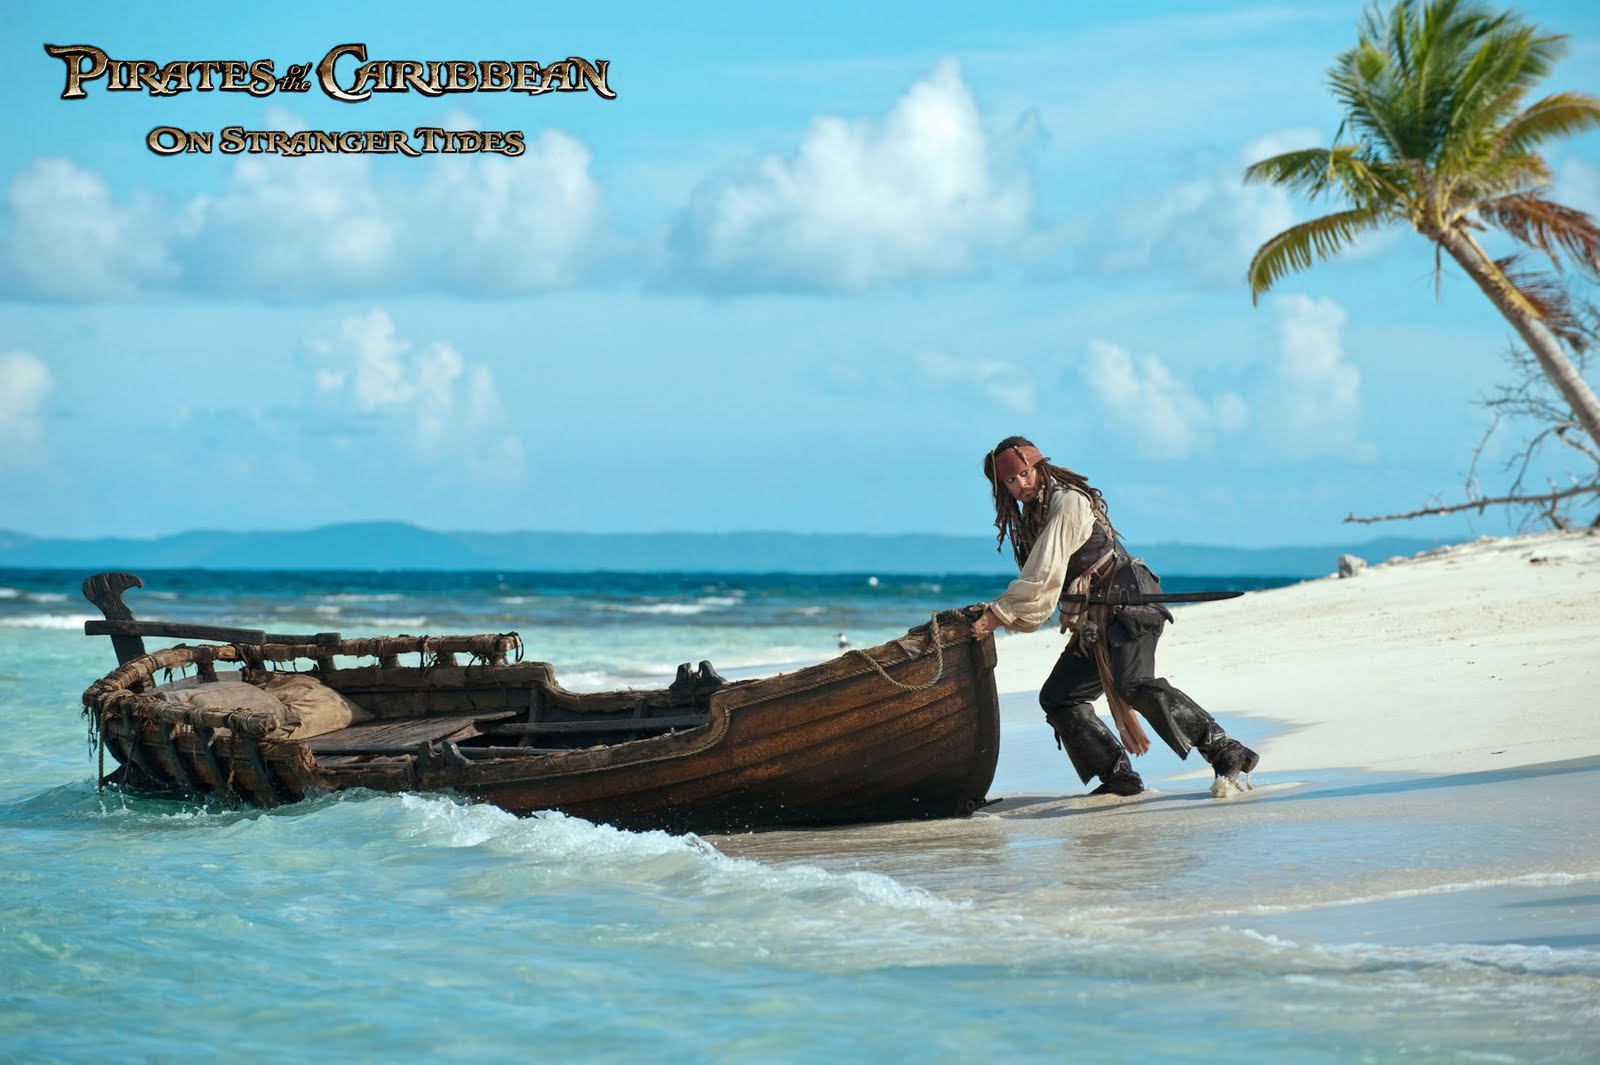 http://1.bp.blogspot.com/-Doth7lGWquo/TdF1bxmkDKI/AAAAAAAABmU/2szNG8eOsyc/s1600/Pirates-of-the-Caribbean-On-Stranger-Tides-41.jpg